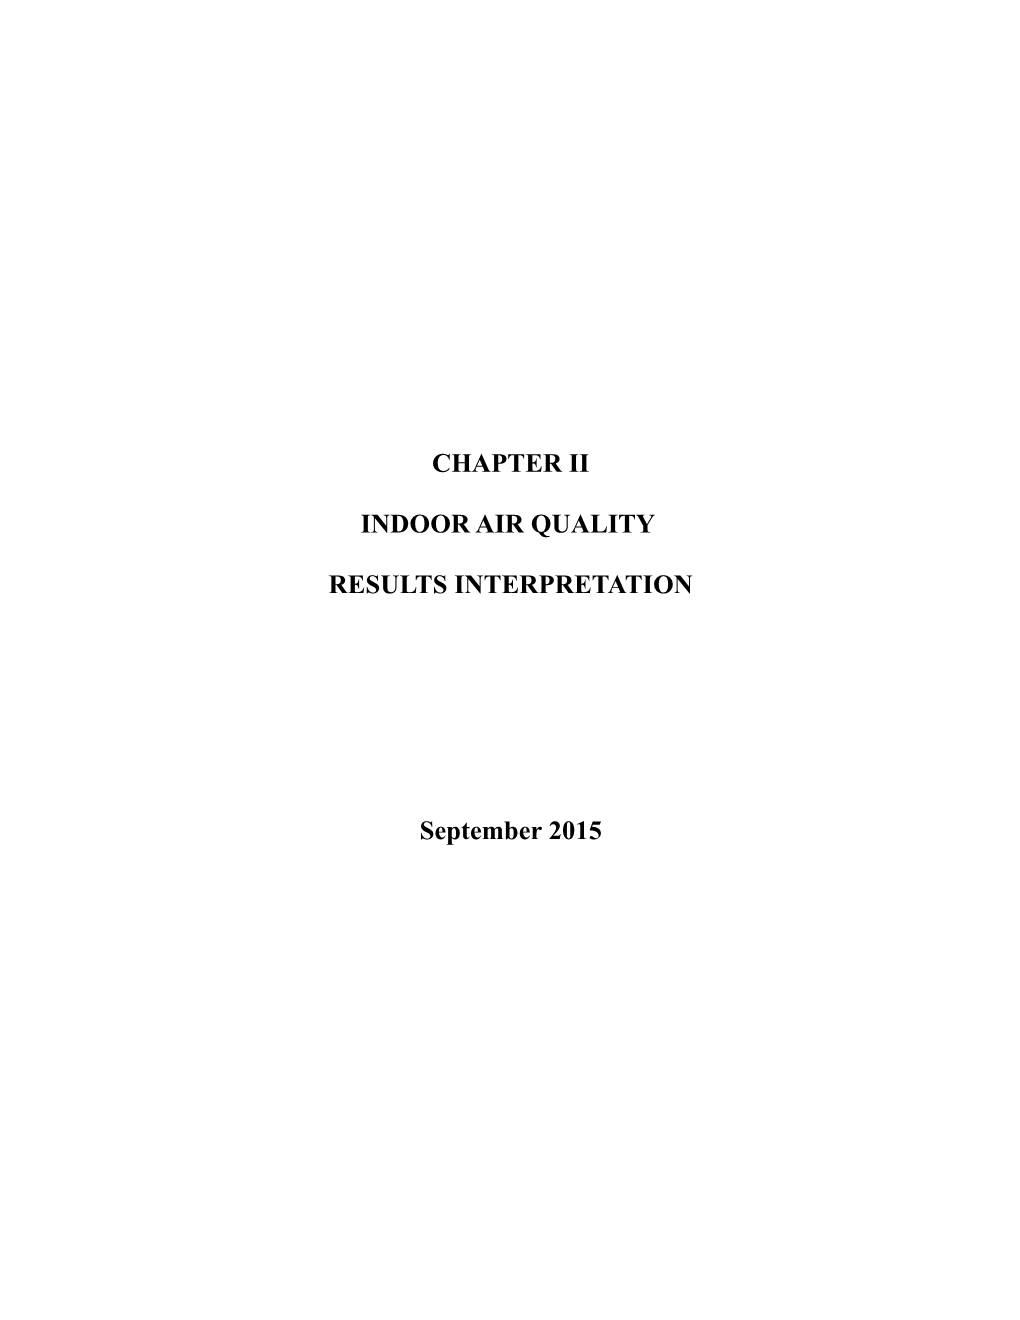 IAQ Manual - Chapter II - Indoor Air Quality Results Interpretation